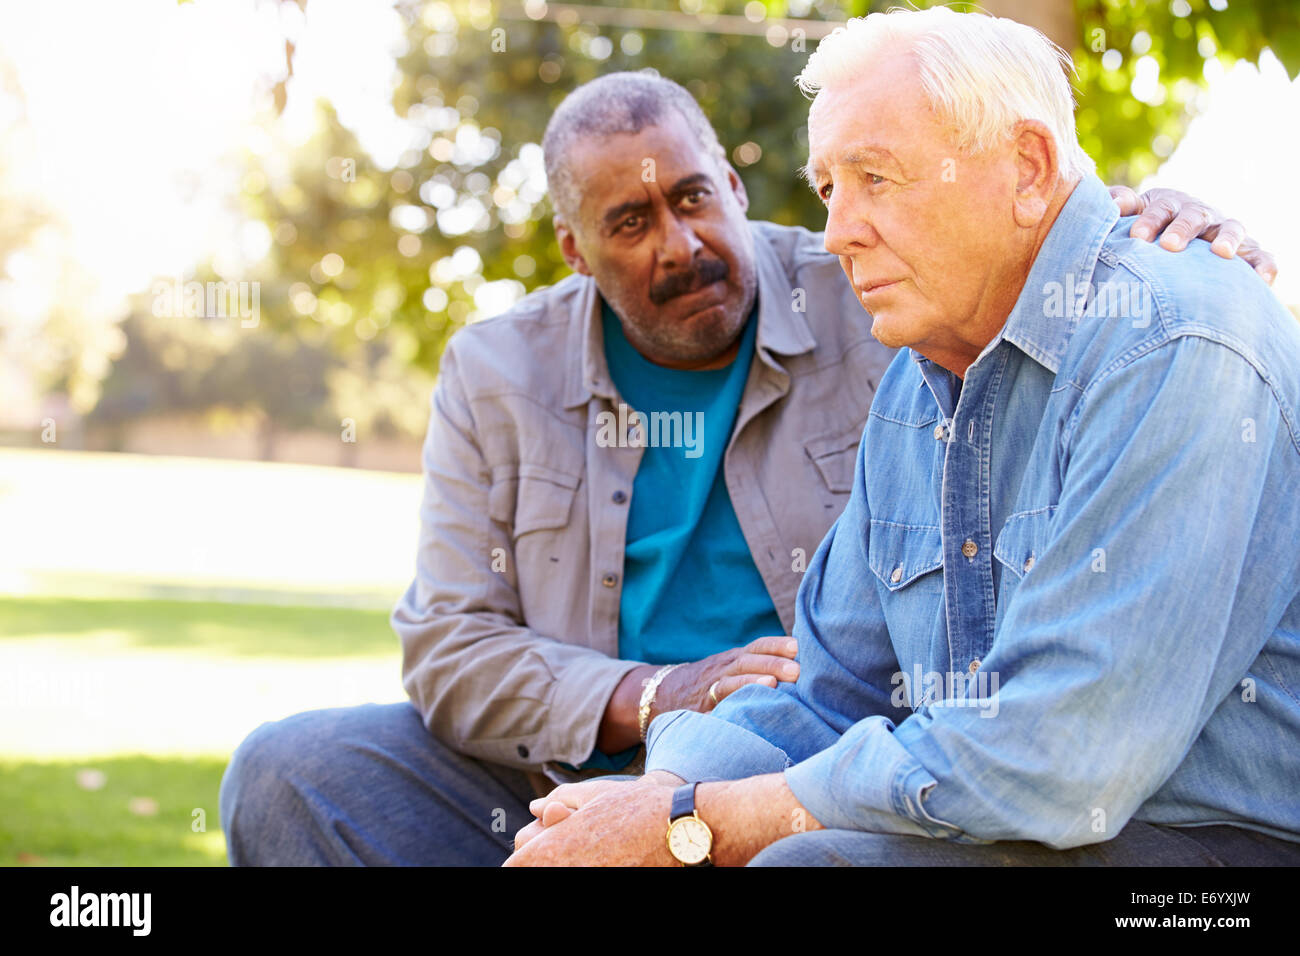 Man Comforting Unhappy Senior Friend Outdoors Stock Photo